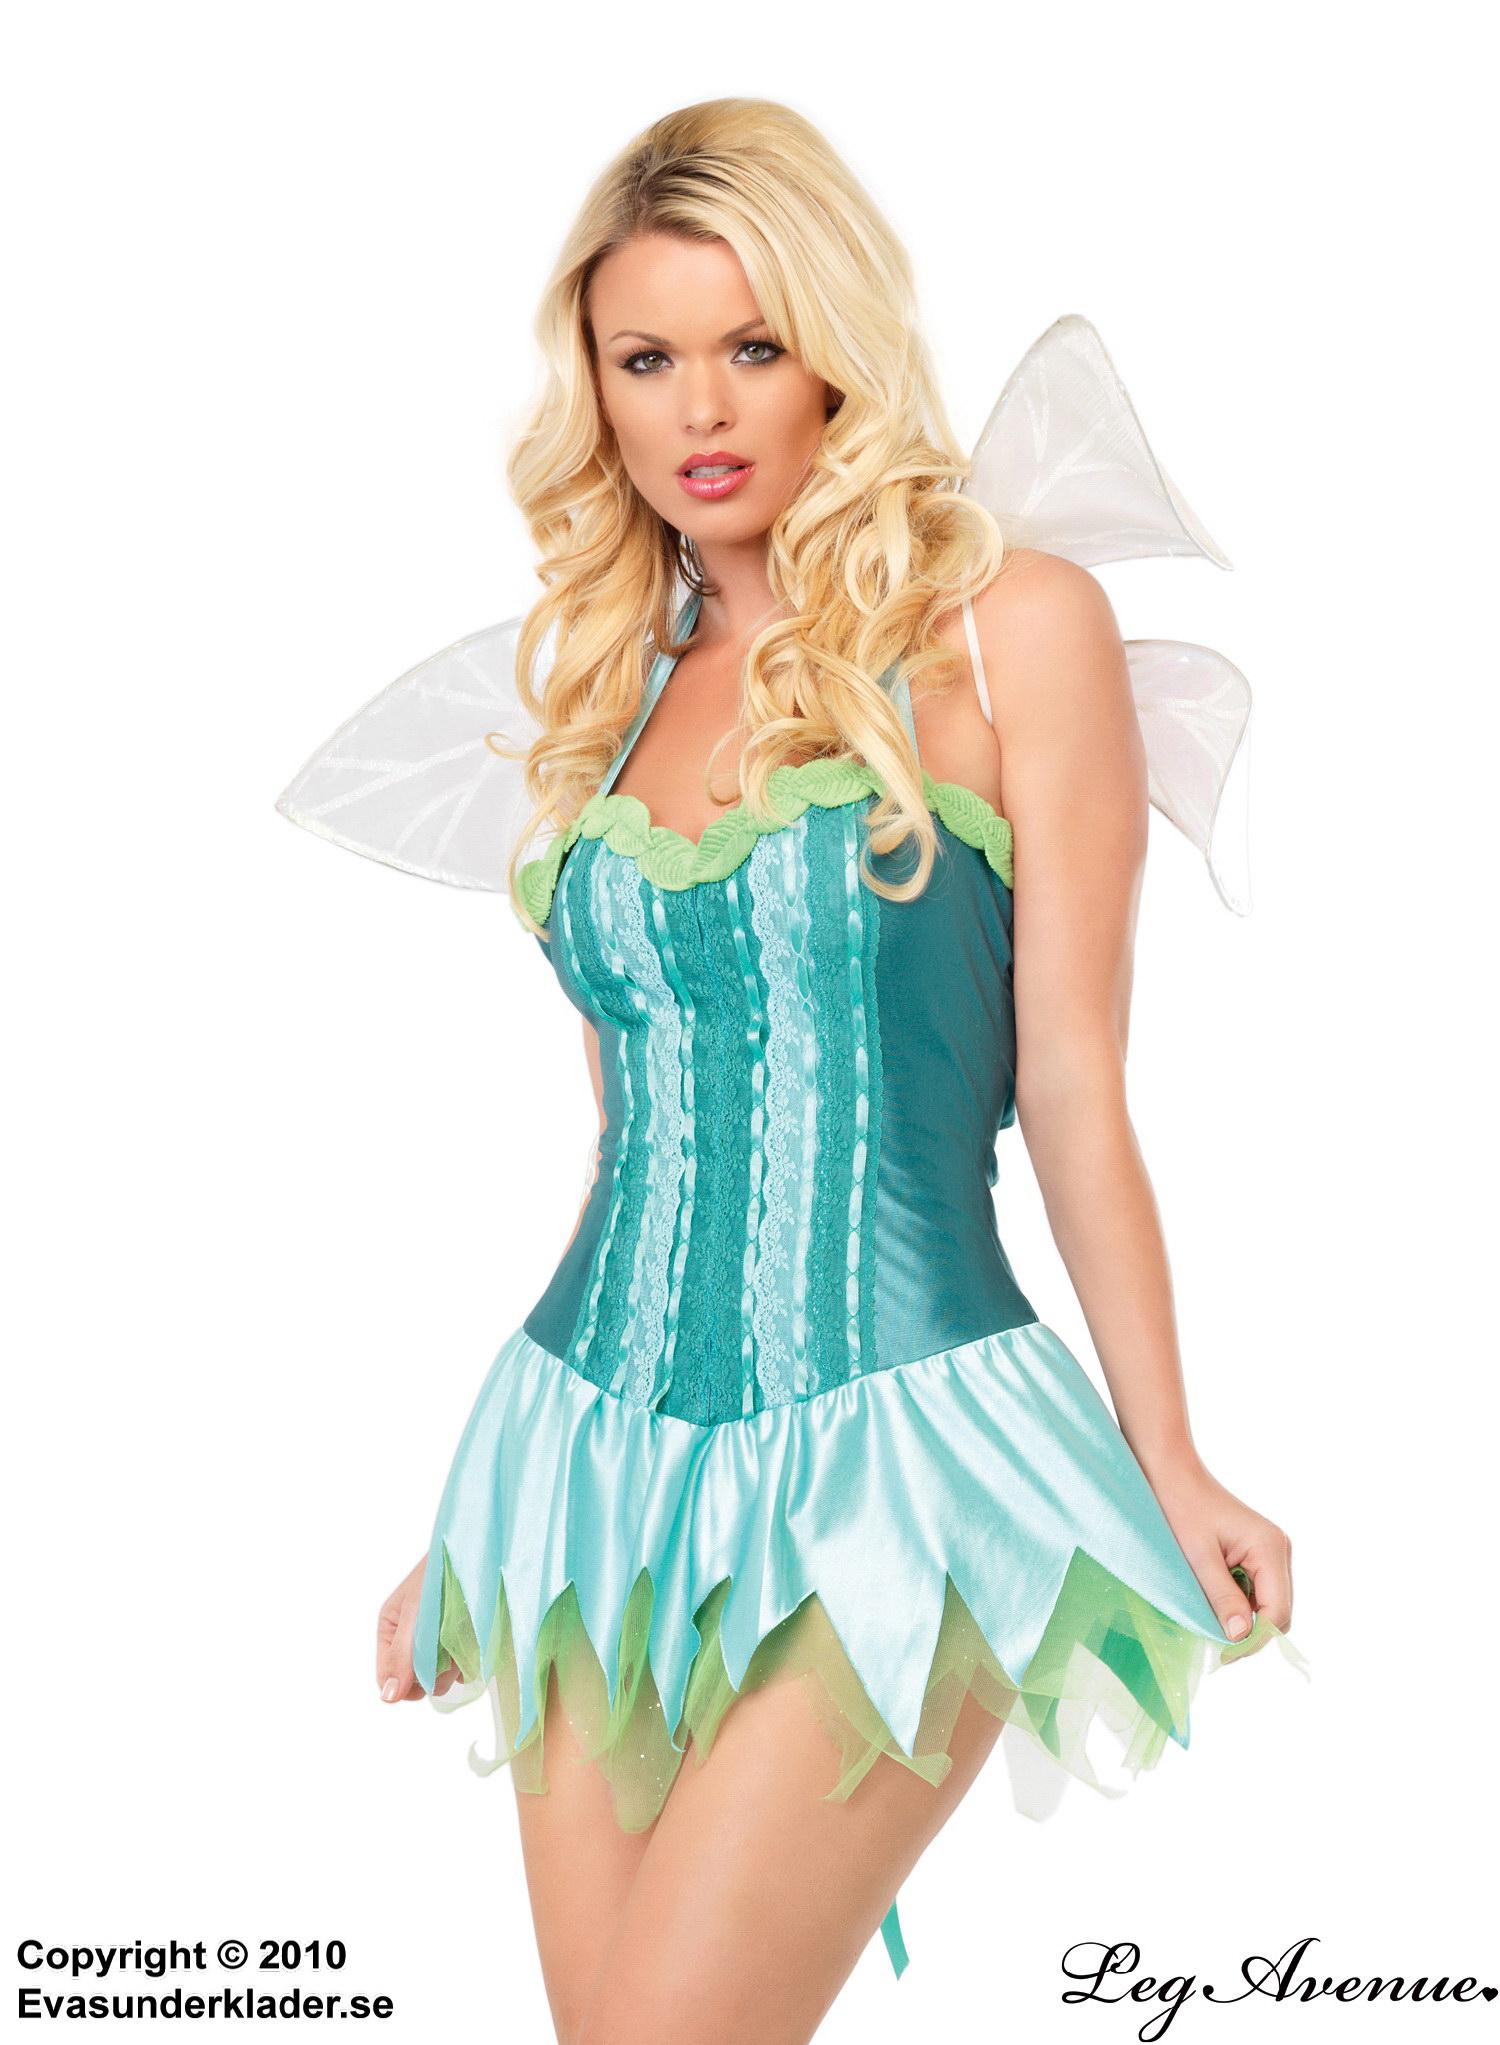 Fairy tale / Princess, costume